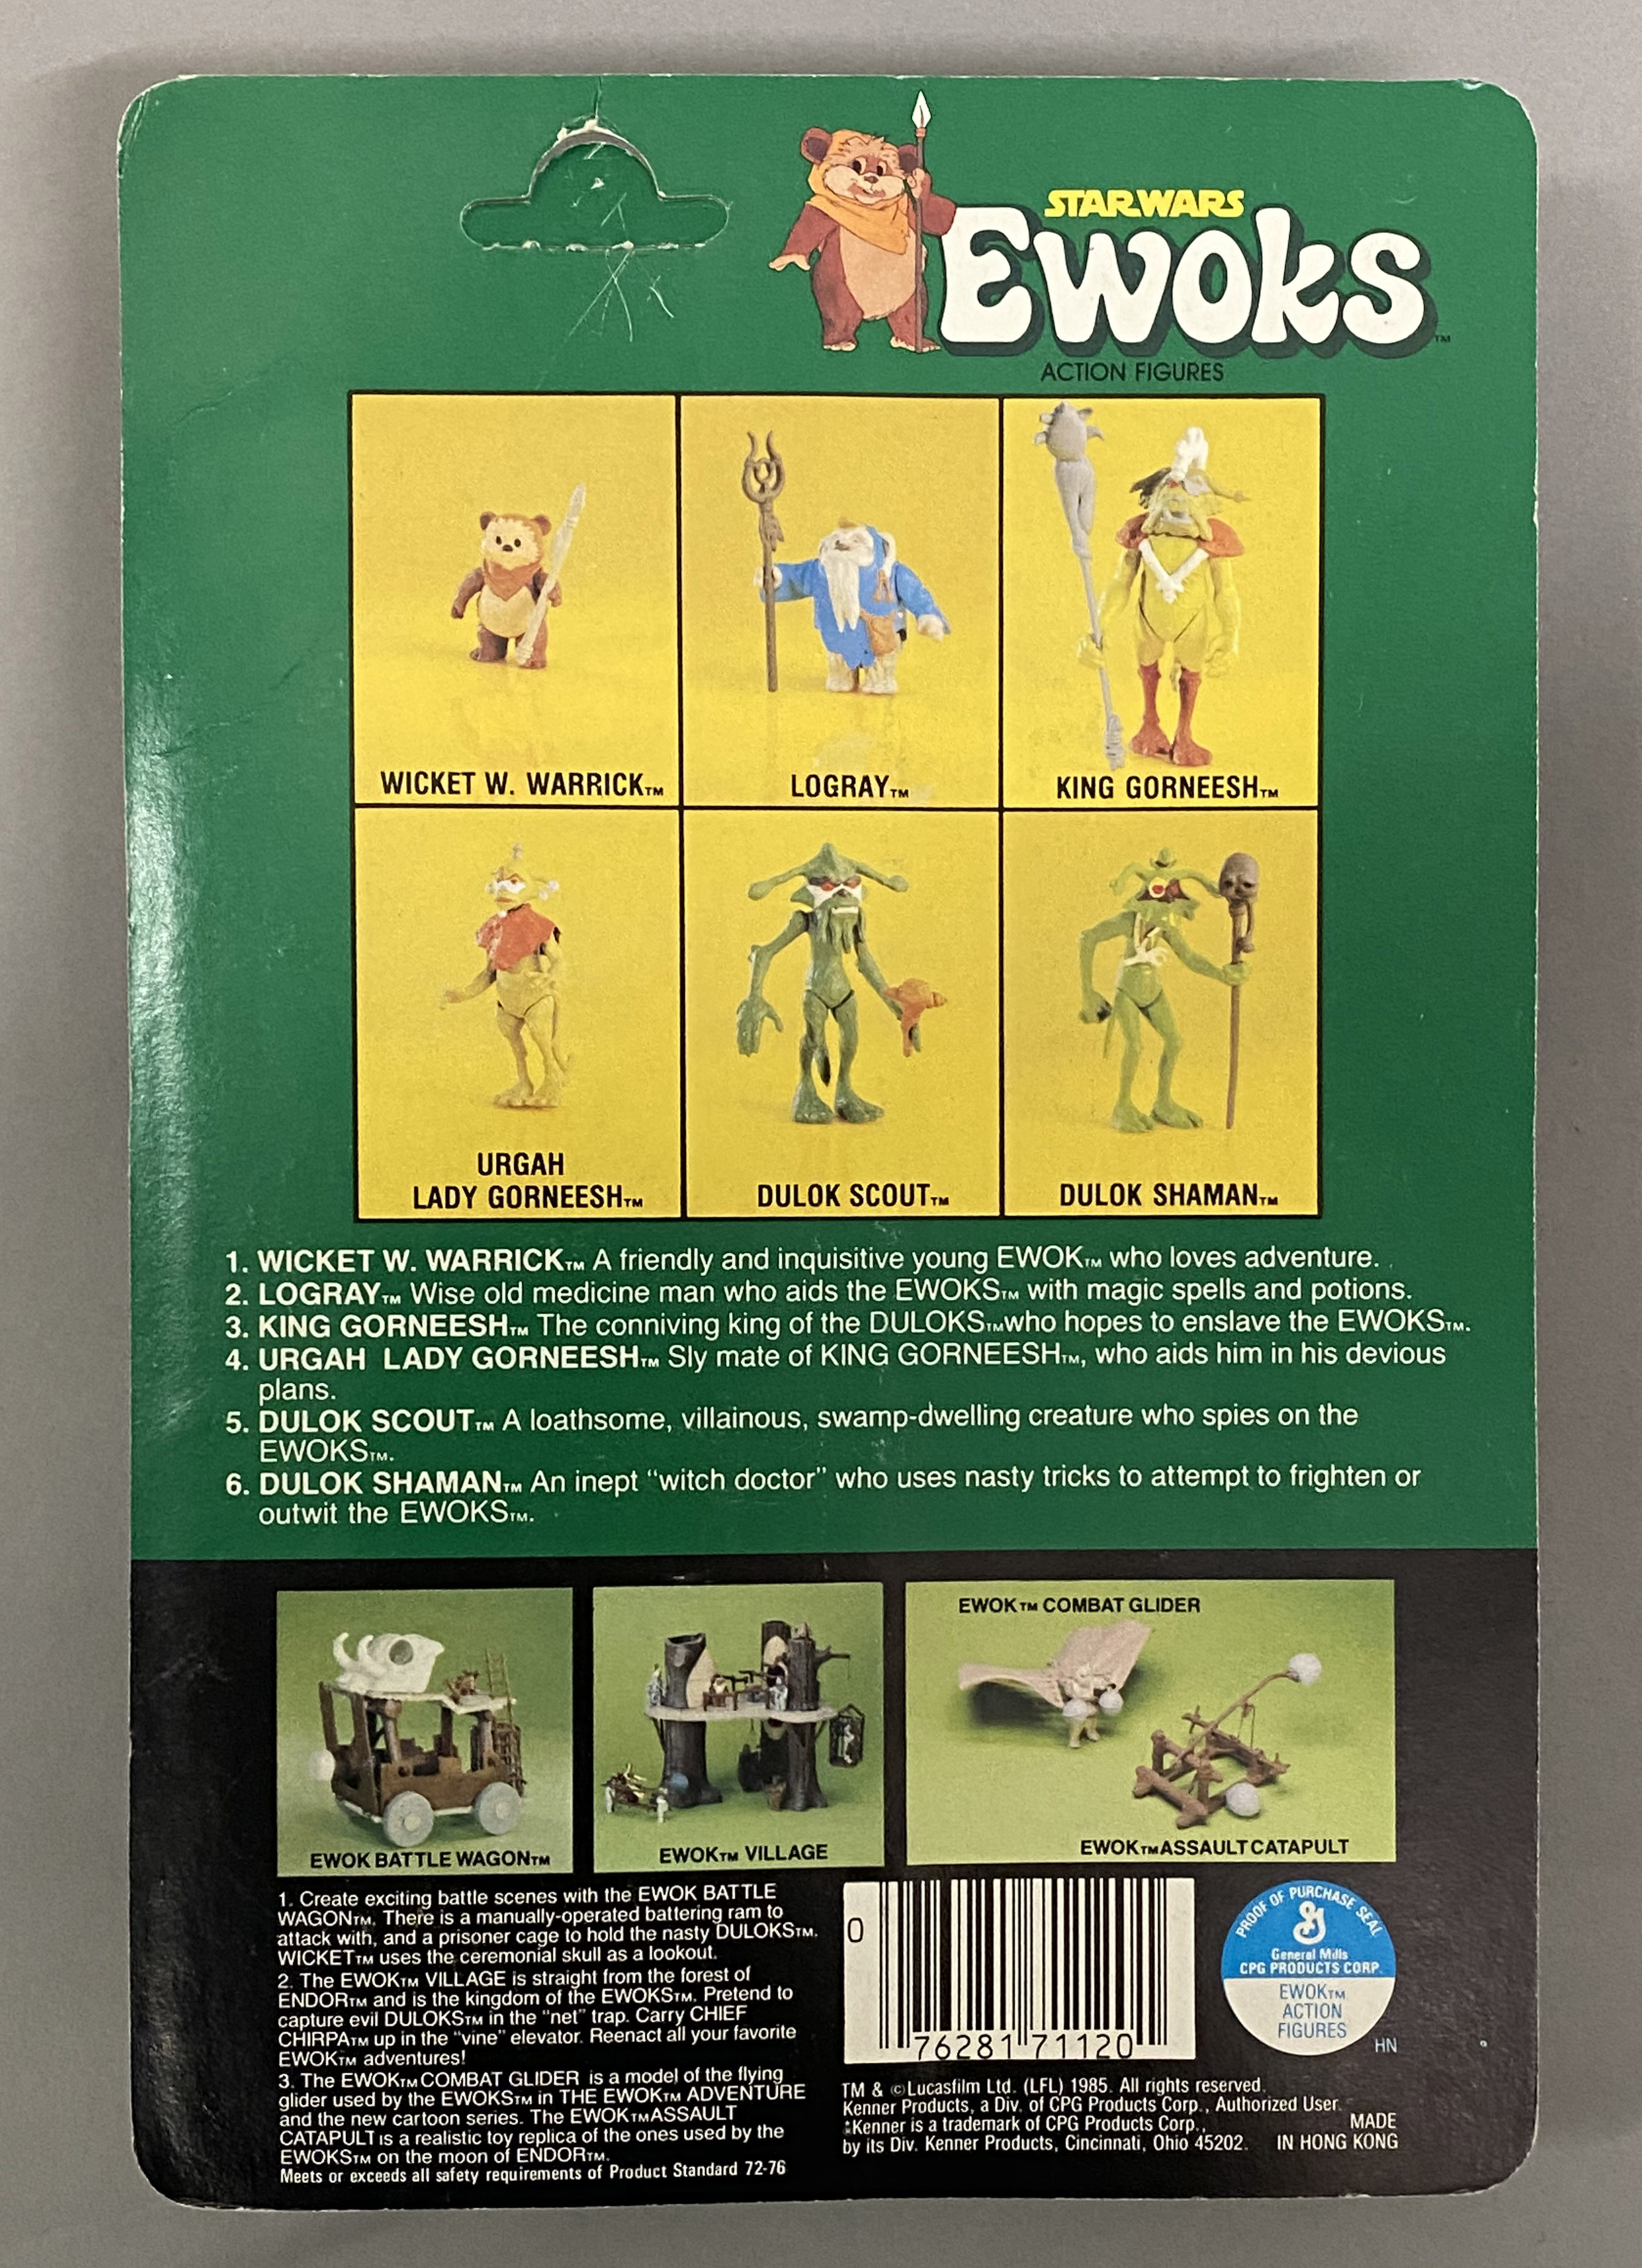 4 vintage Kenner Star Wars figures on Ewok backing cards: Logray, Dulok Scout, King Gorneesh and Sha - Image 7 of 9